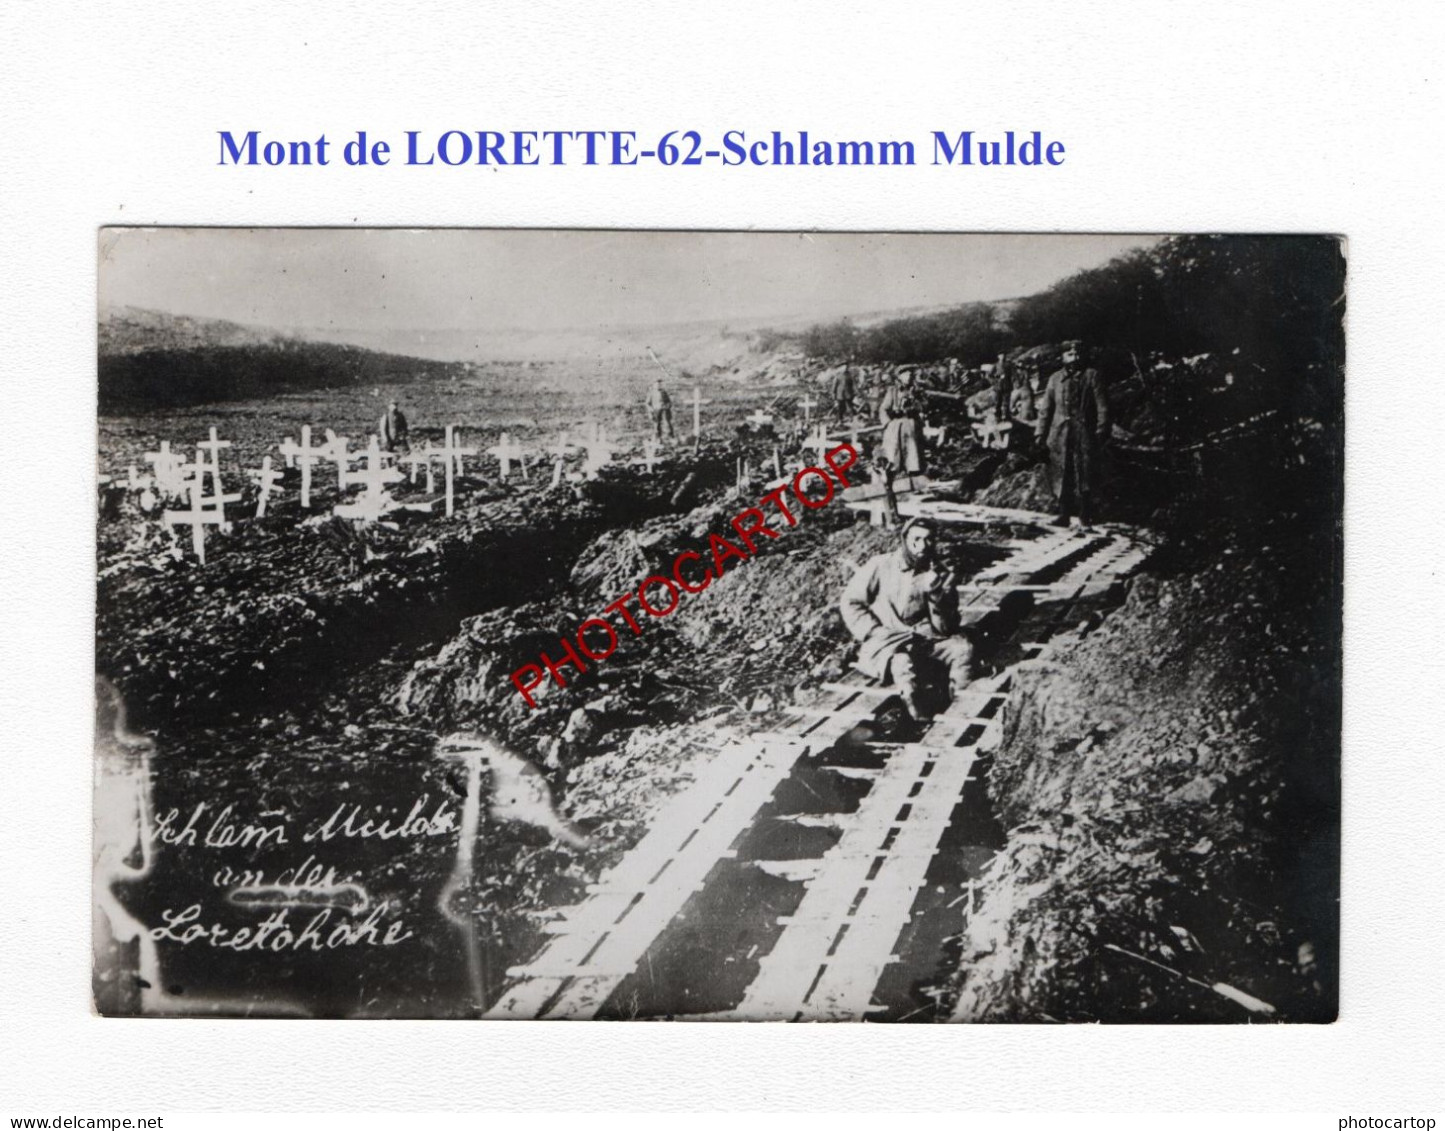 Mont De LORETTE-Loretto-62-Schlamm Mulde-Cimetiere-Tombes-CARTE PHOTO Allemande-GUERRE 14-18-1 WK-MILITARIA- - Soldatenfriedhöfen